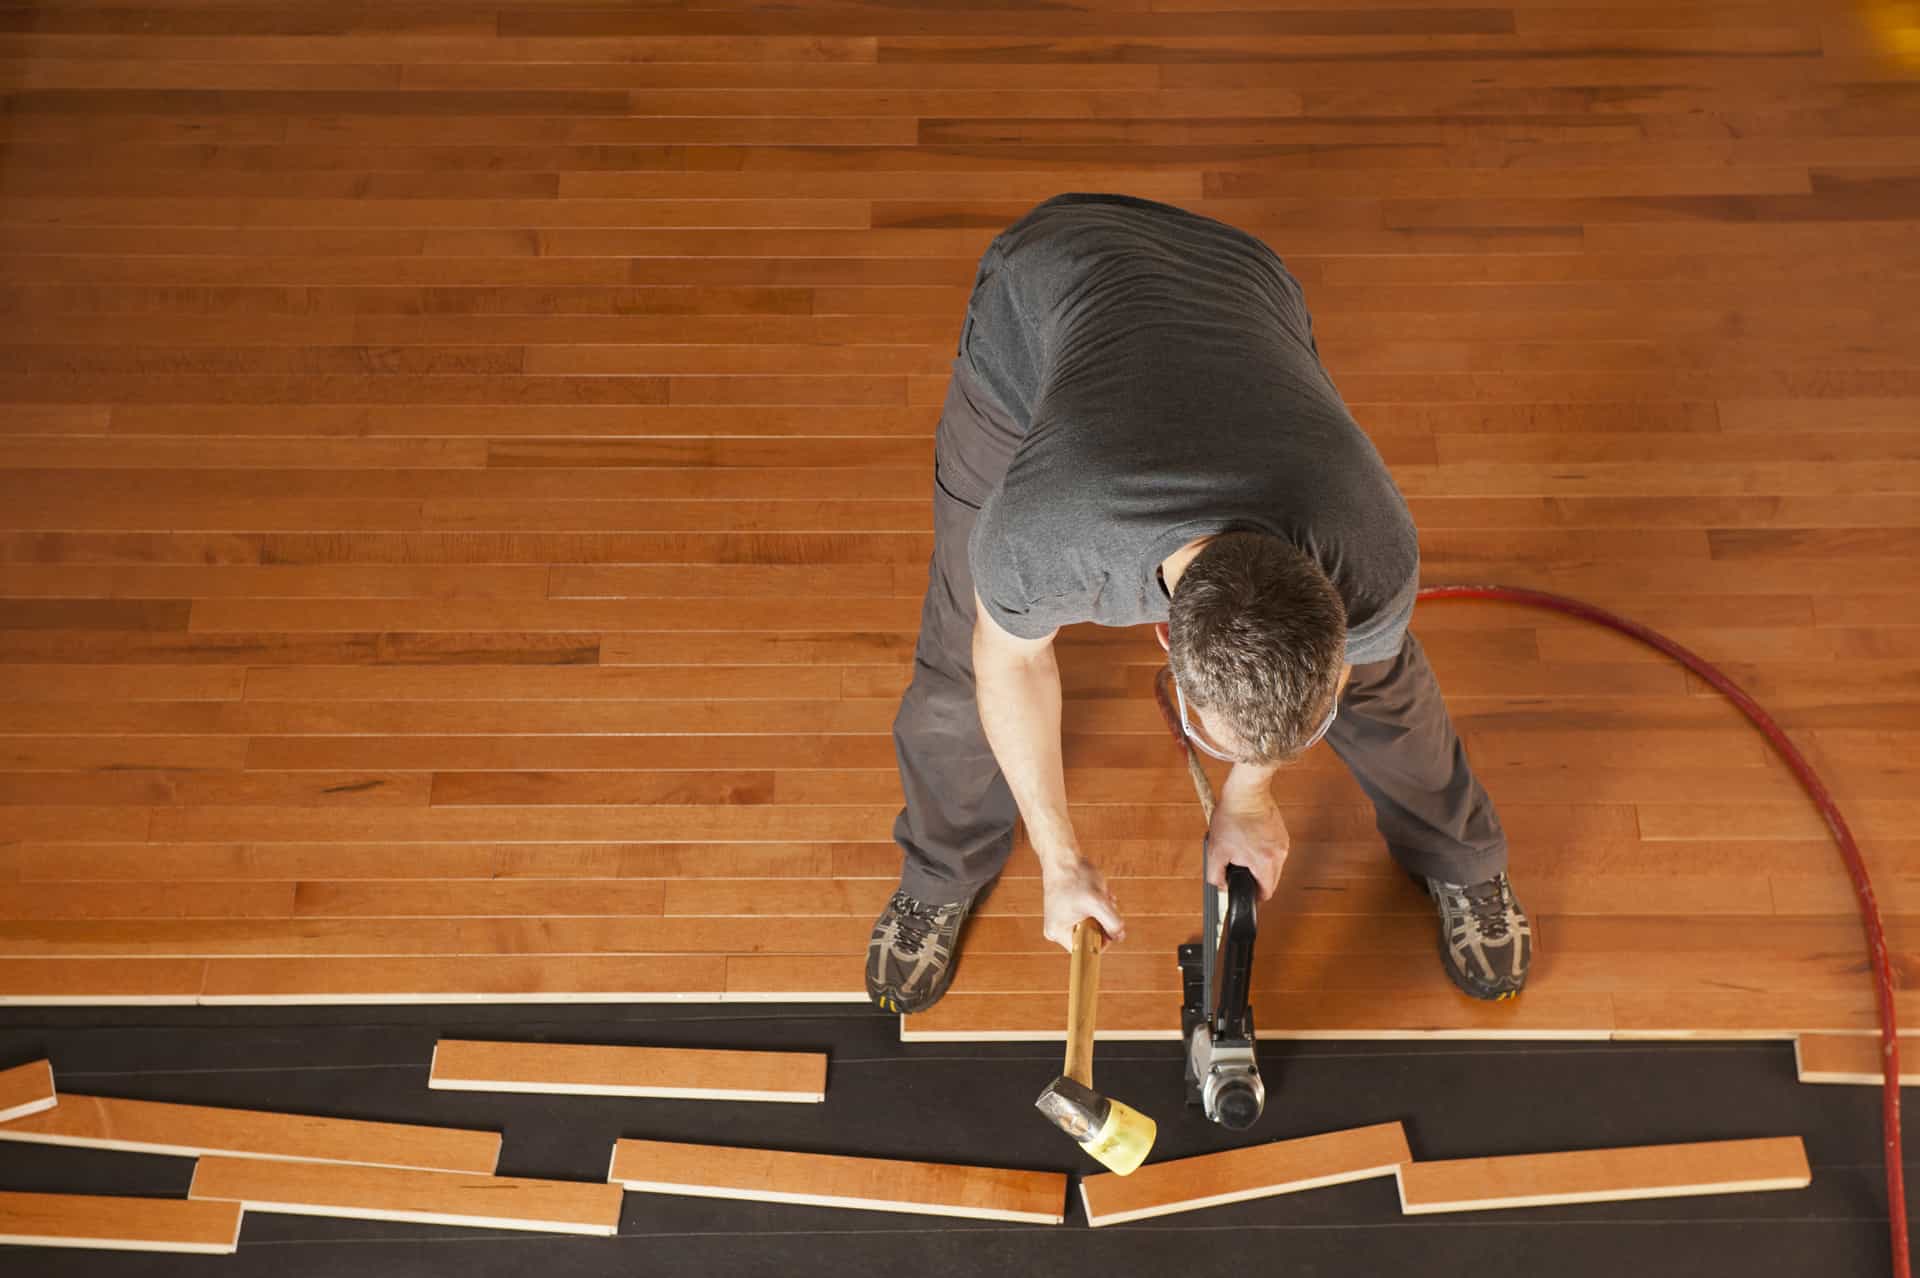 How Long to Install Hardwood Floor